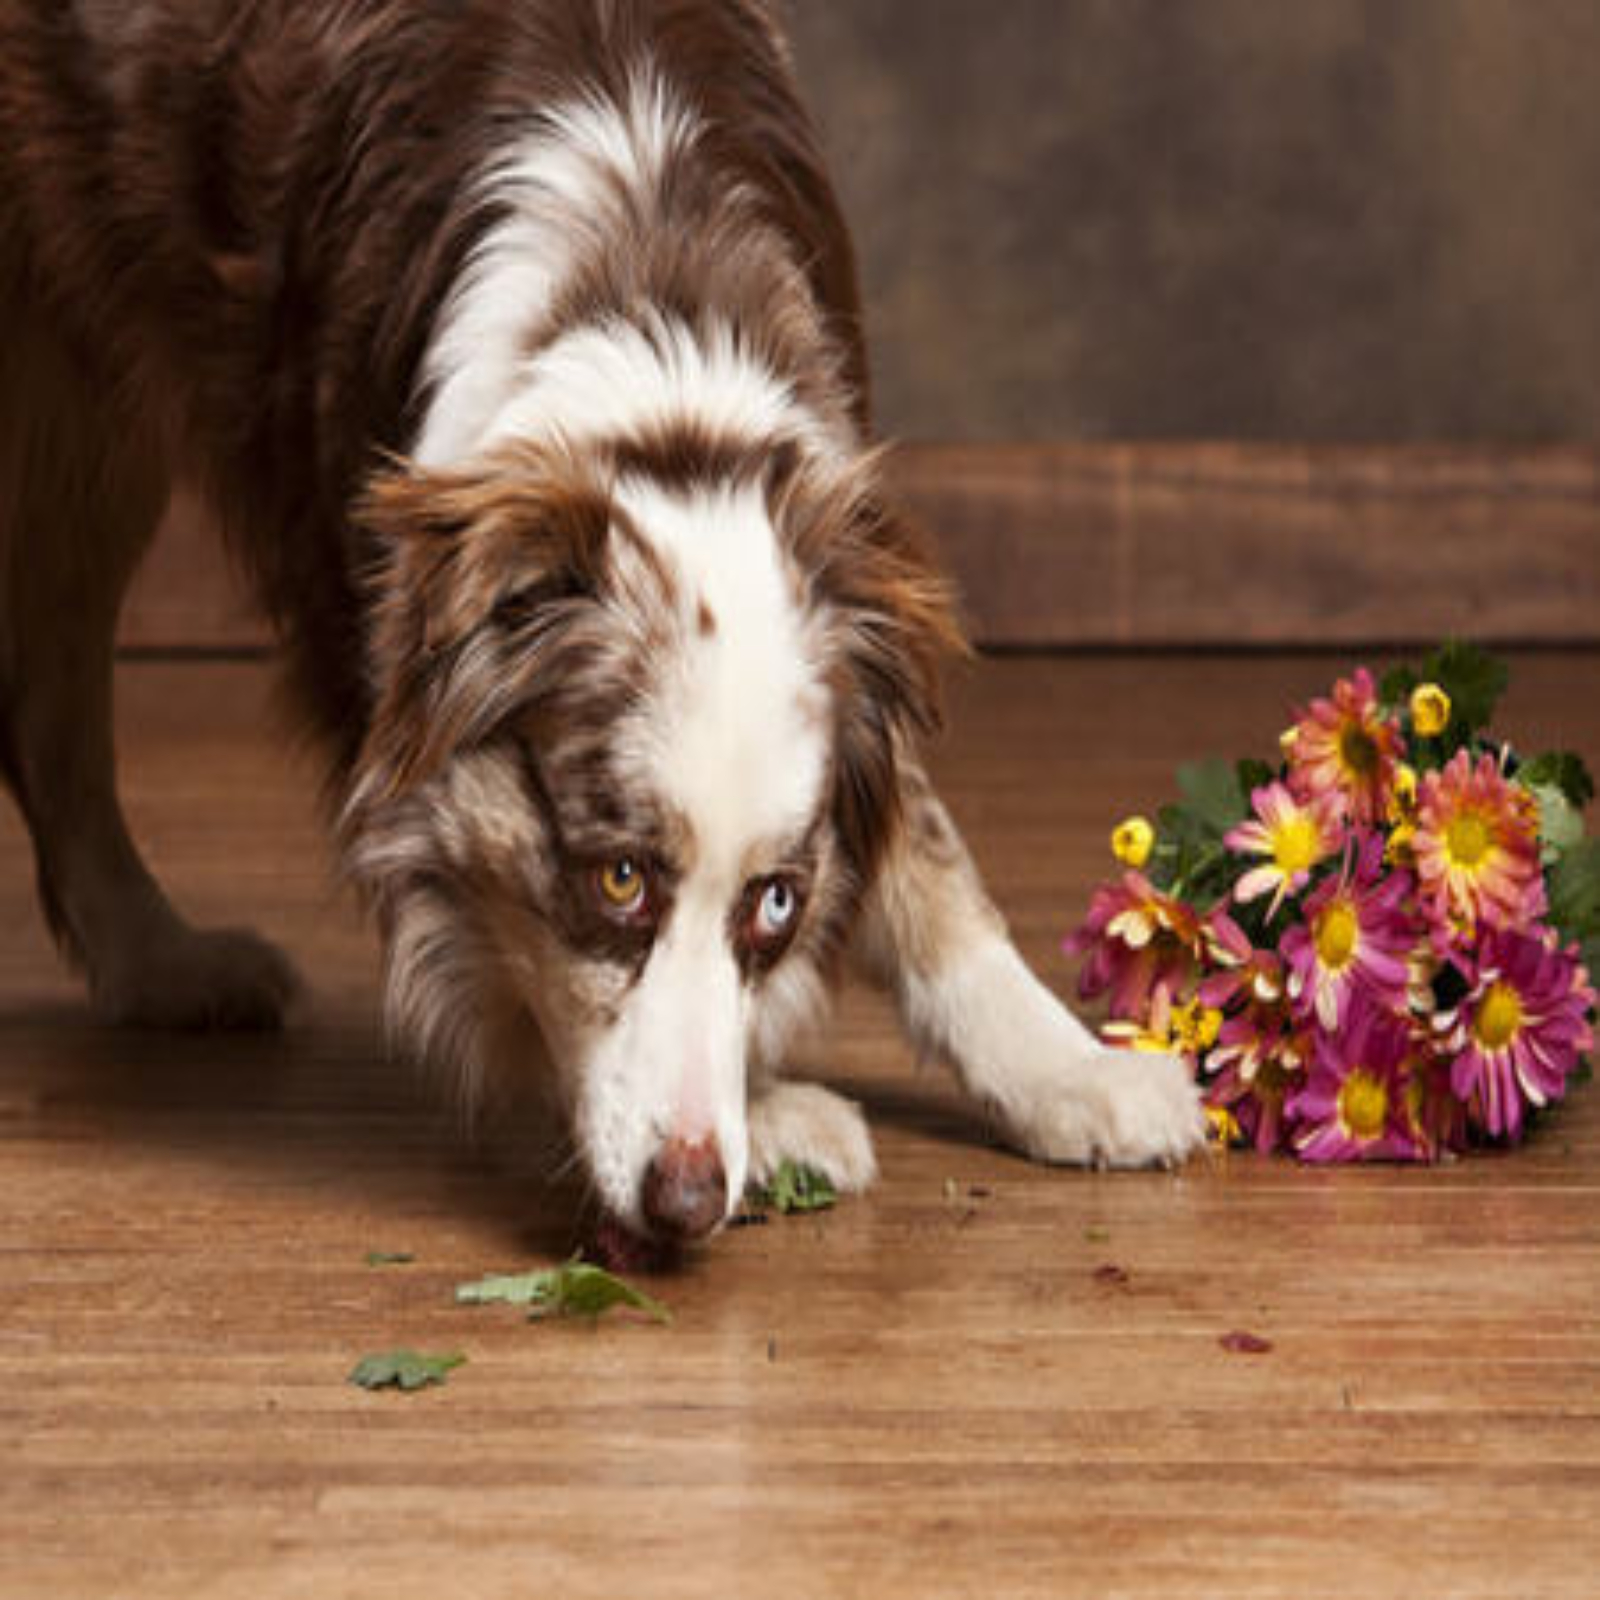 Dog on hardwood floor | Carpets And More, Inc